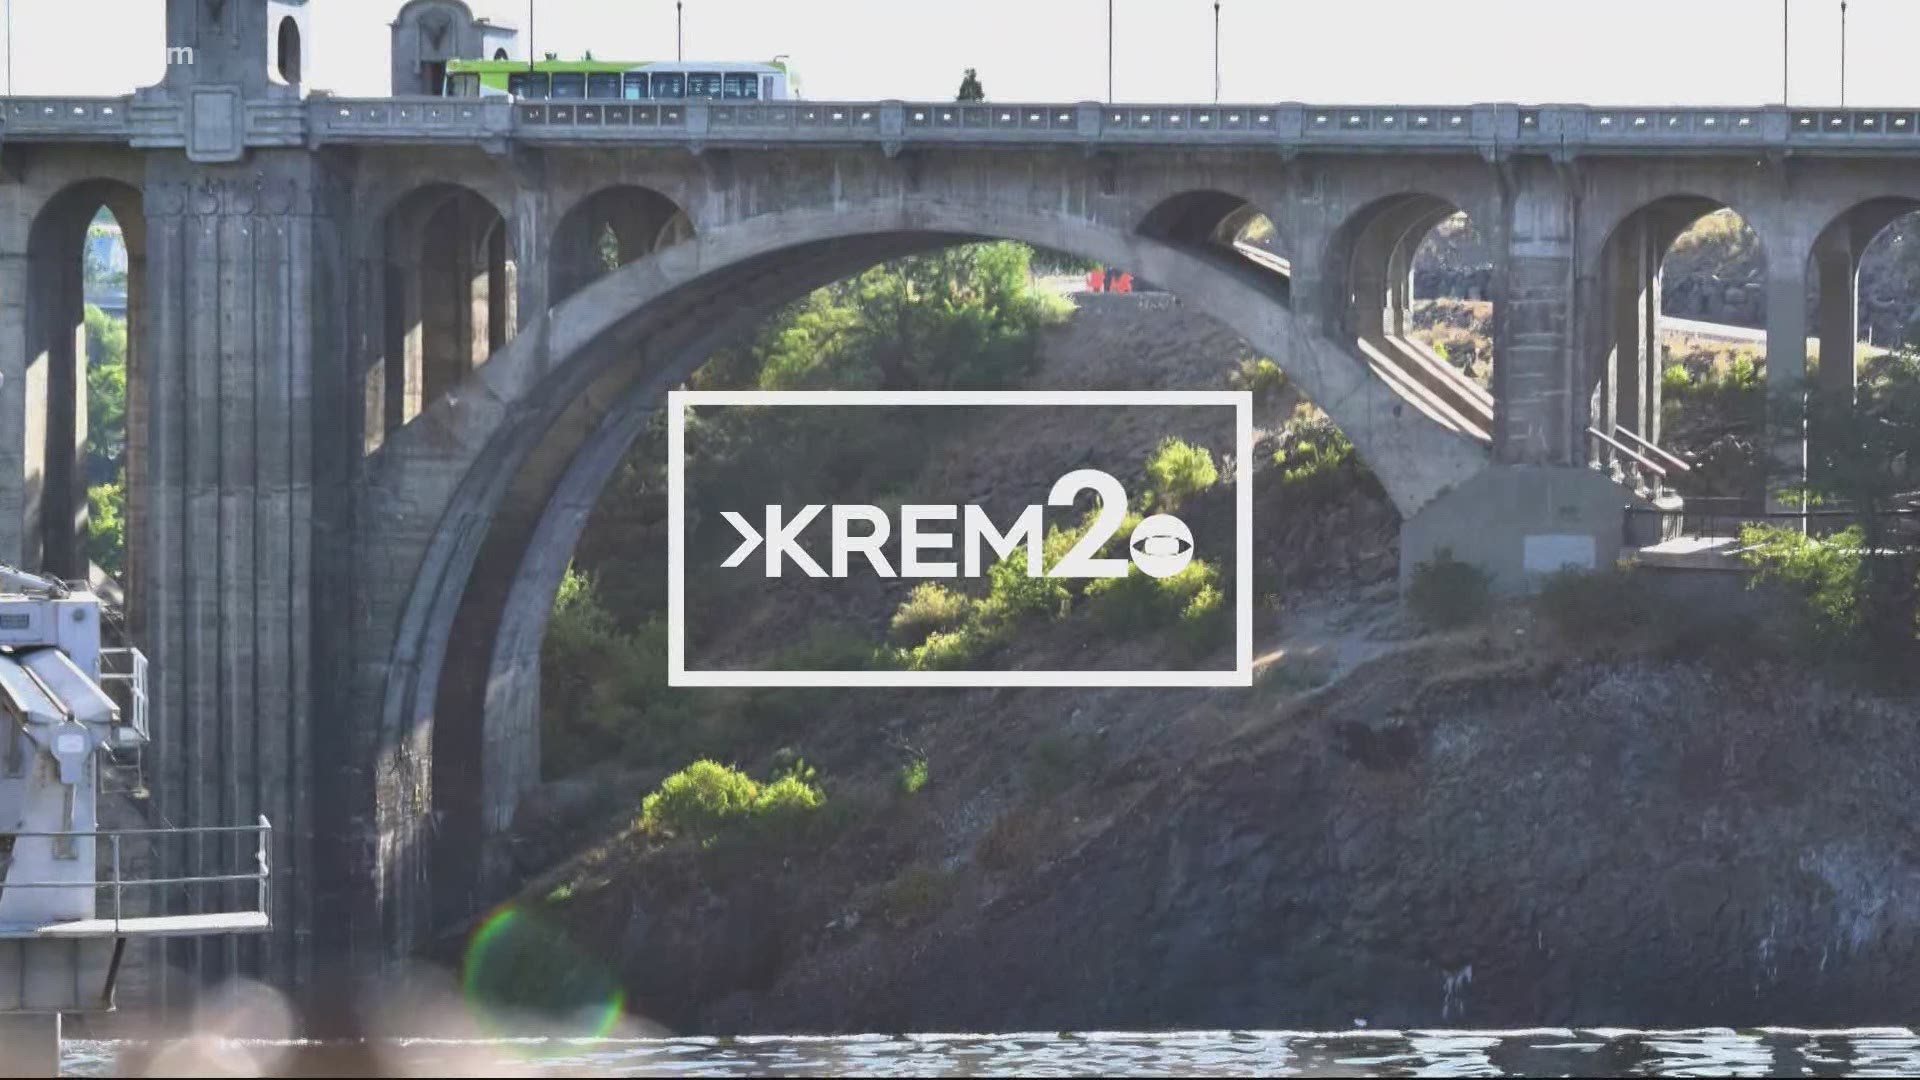 KREM 2 News at 5 top stories for Spokane and North Idaho on Jan. 19, 2021